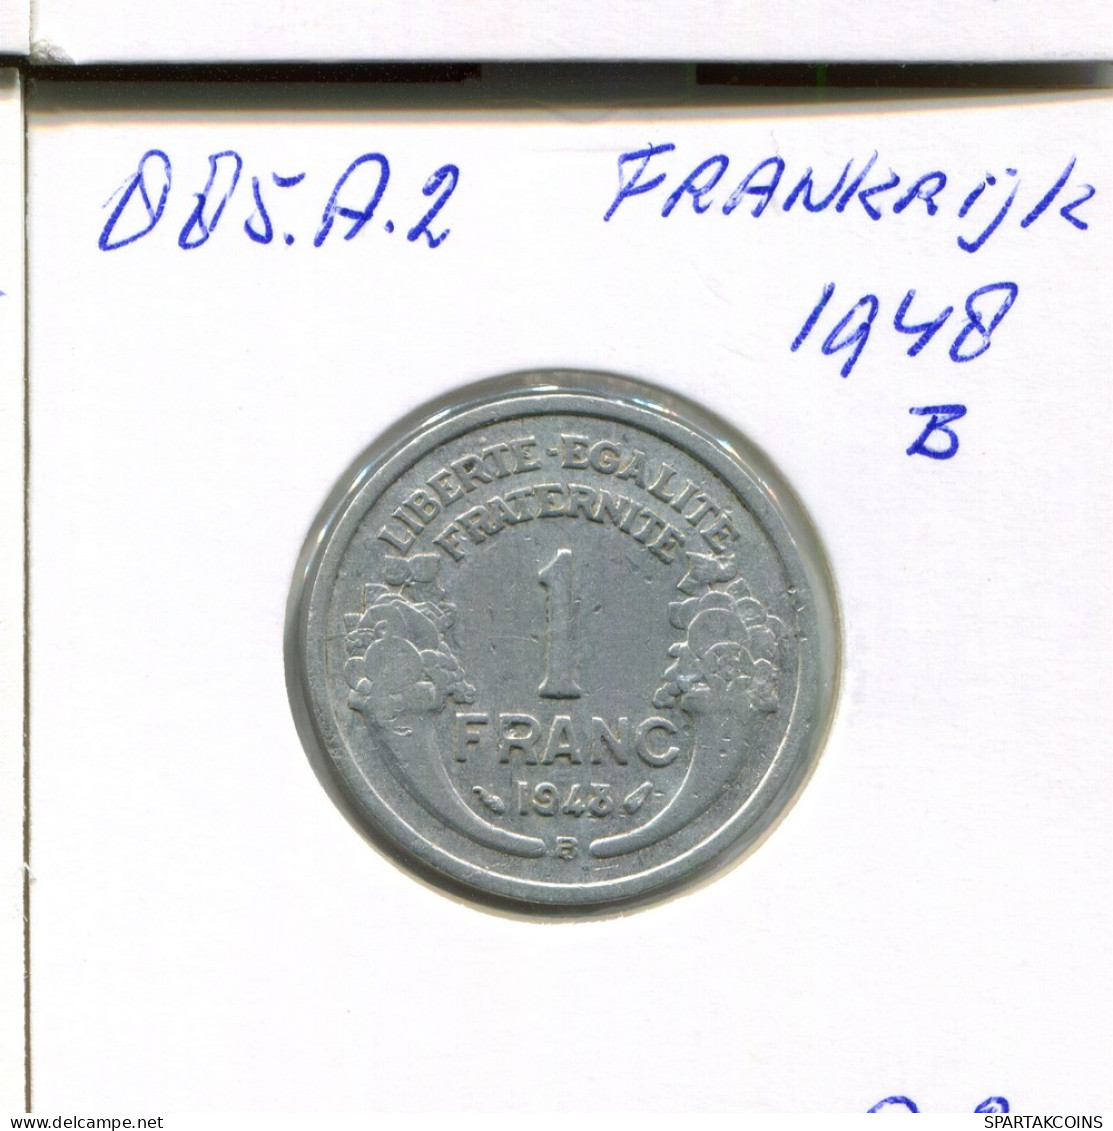 1 FRANC 1948 FRANCE Coin French Coin #AN293 - 1 Franc